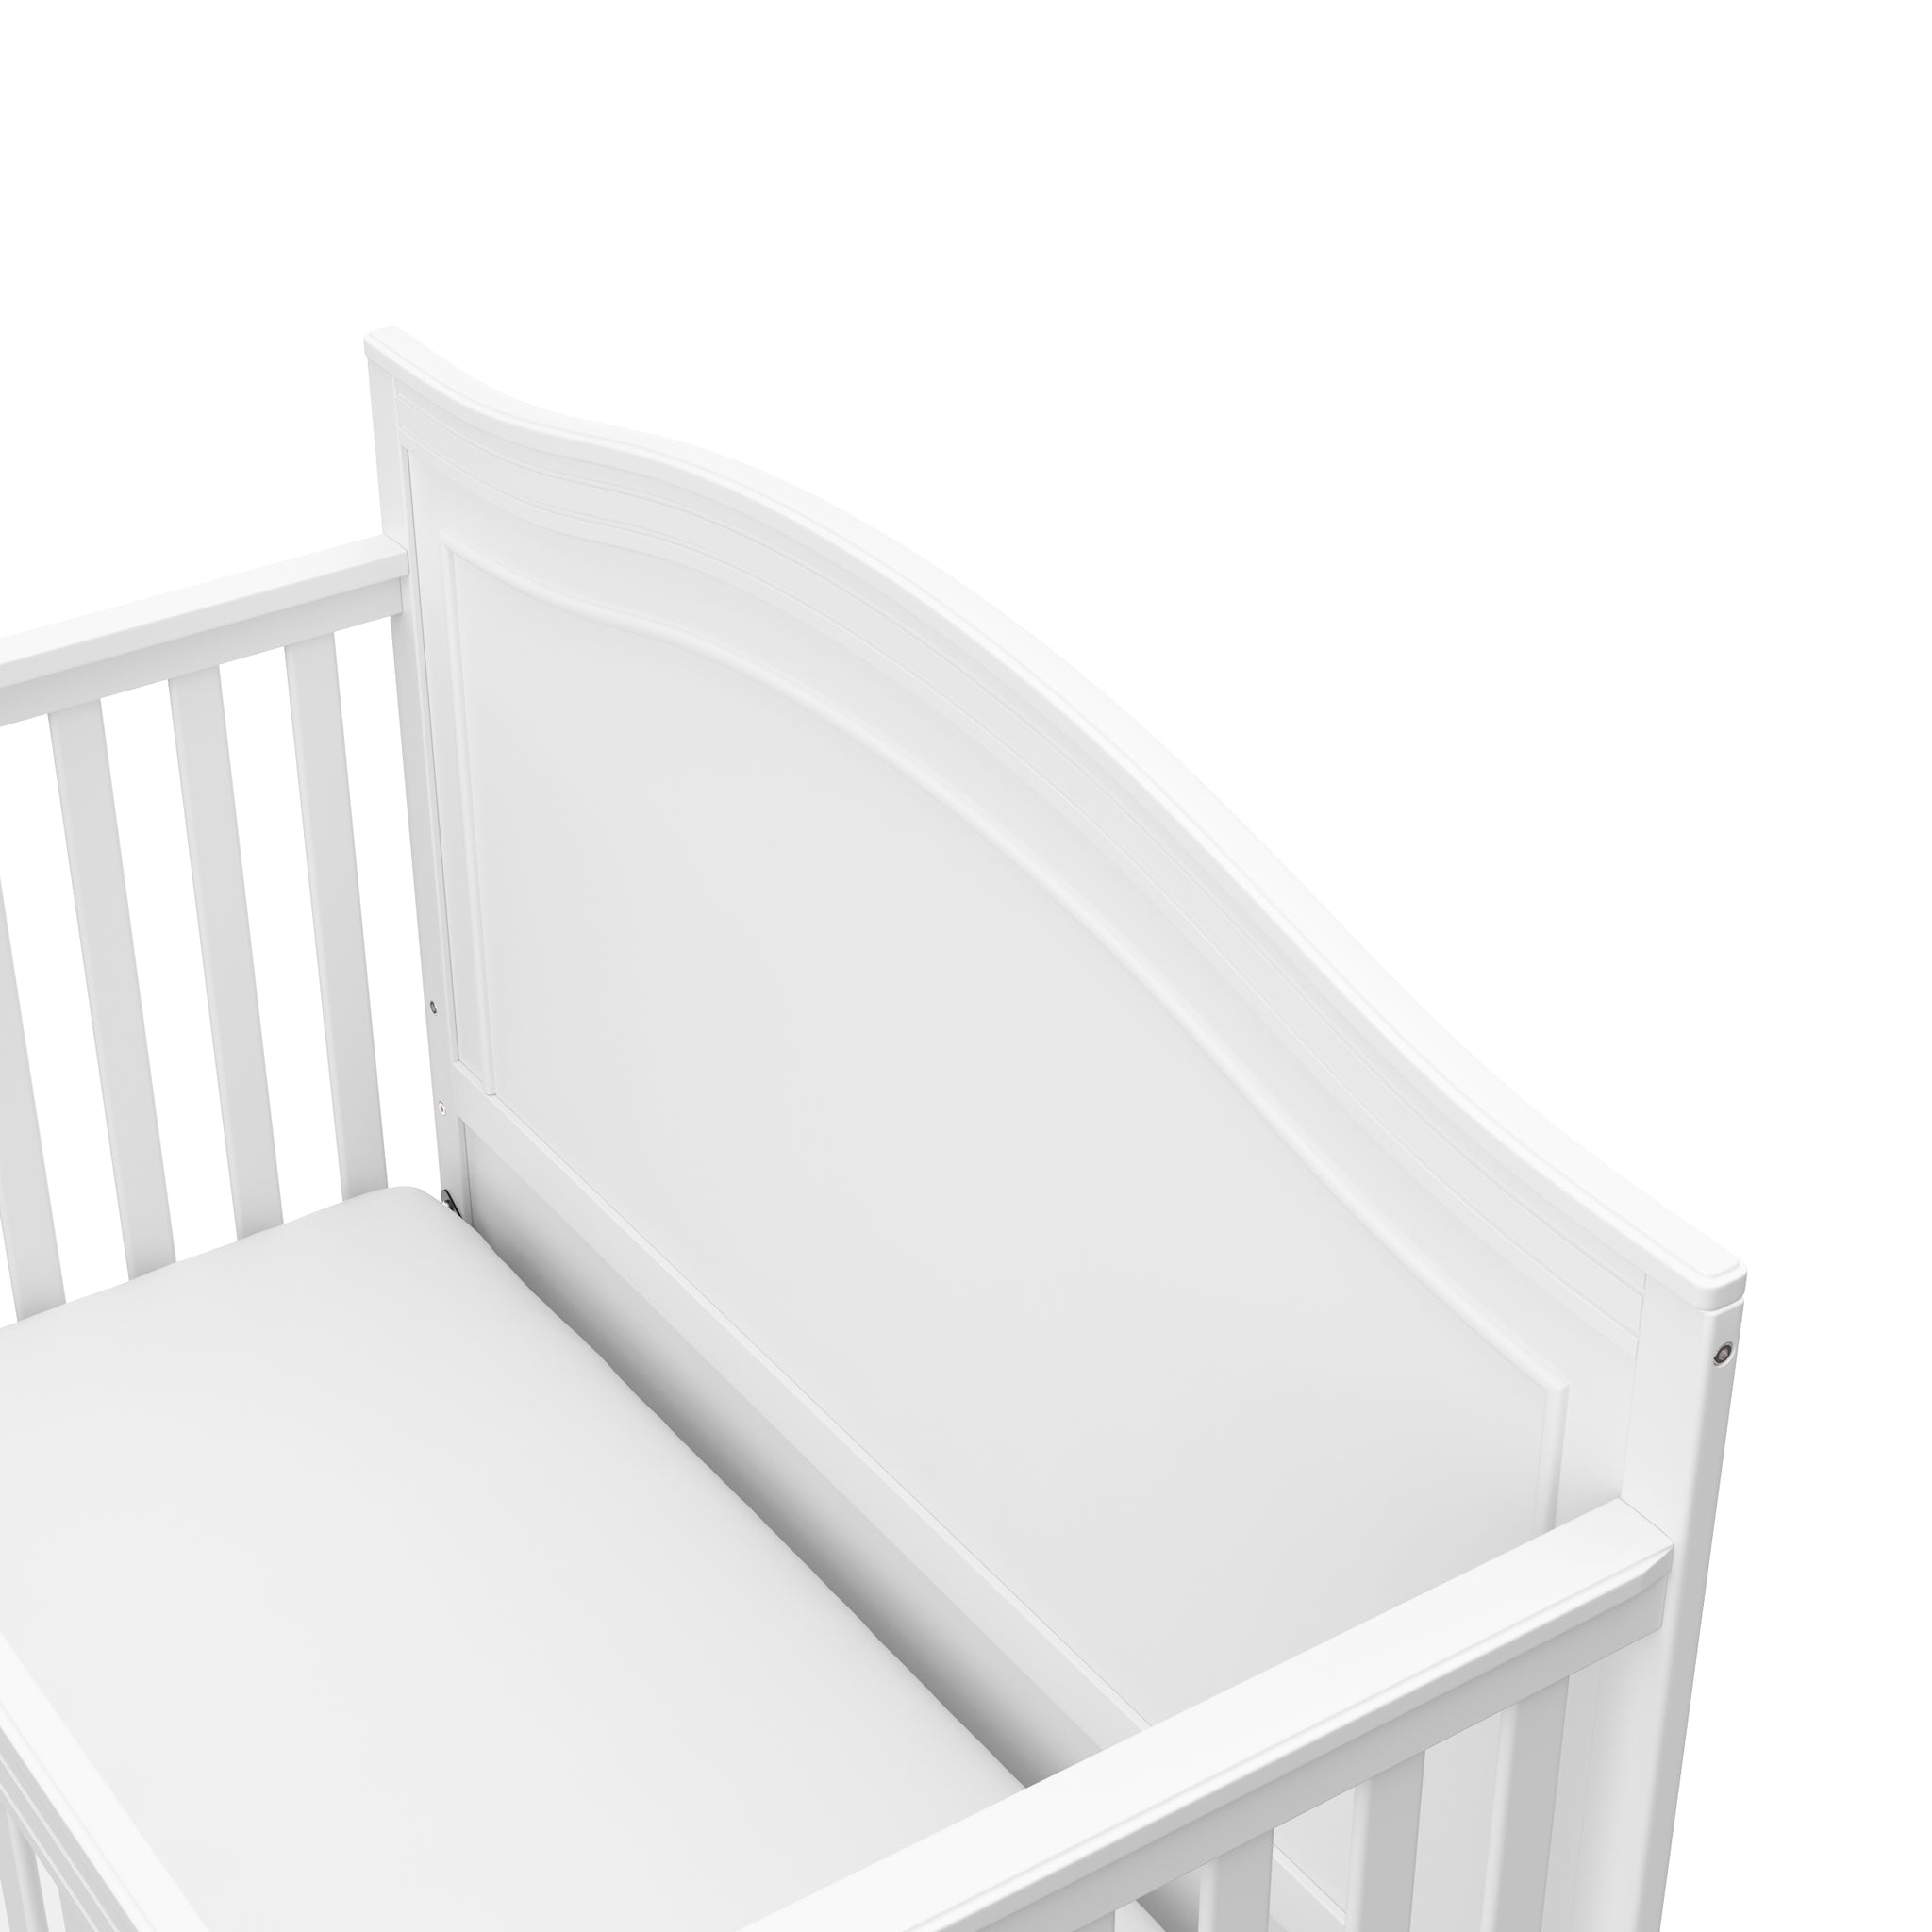 close-up view of white crib